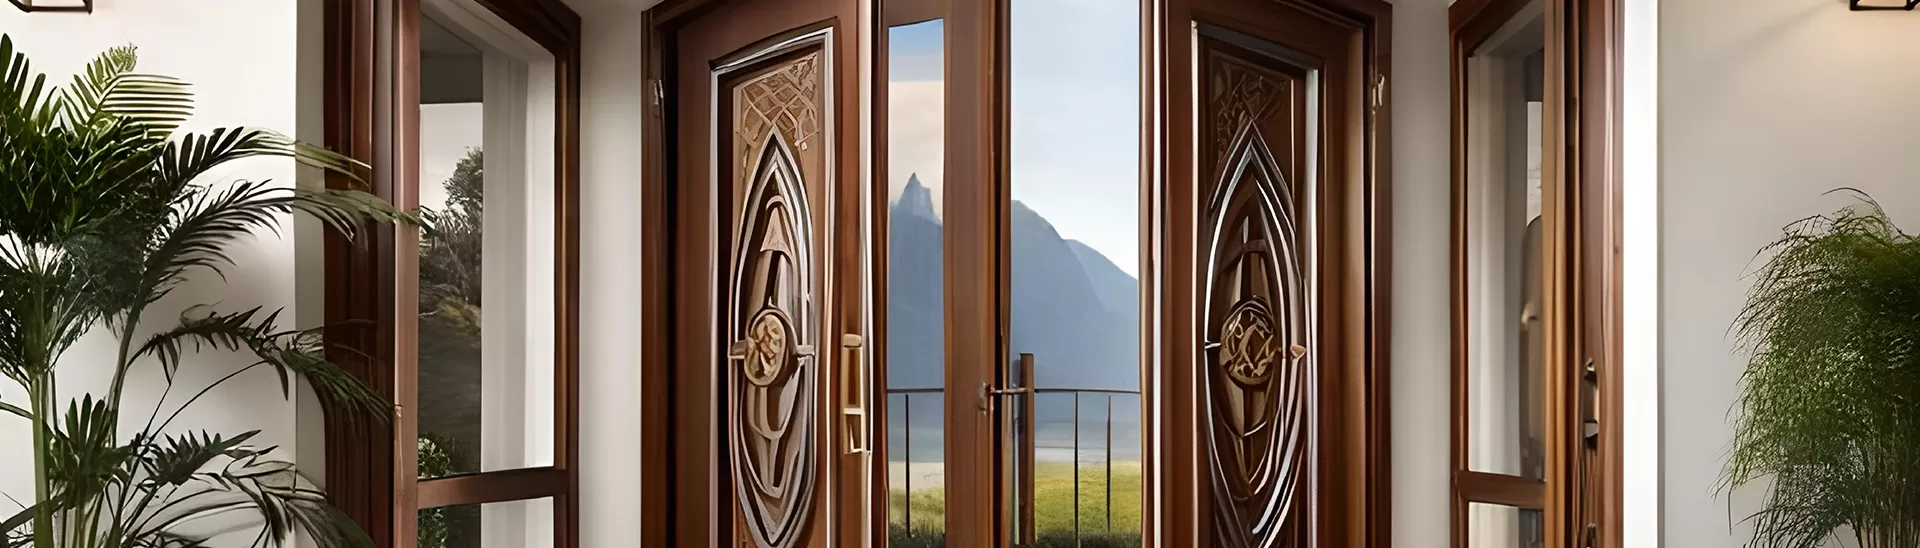 Elegant Main Hall Double Door Designs to Enhance Your Home